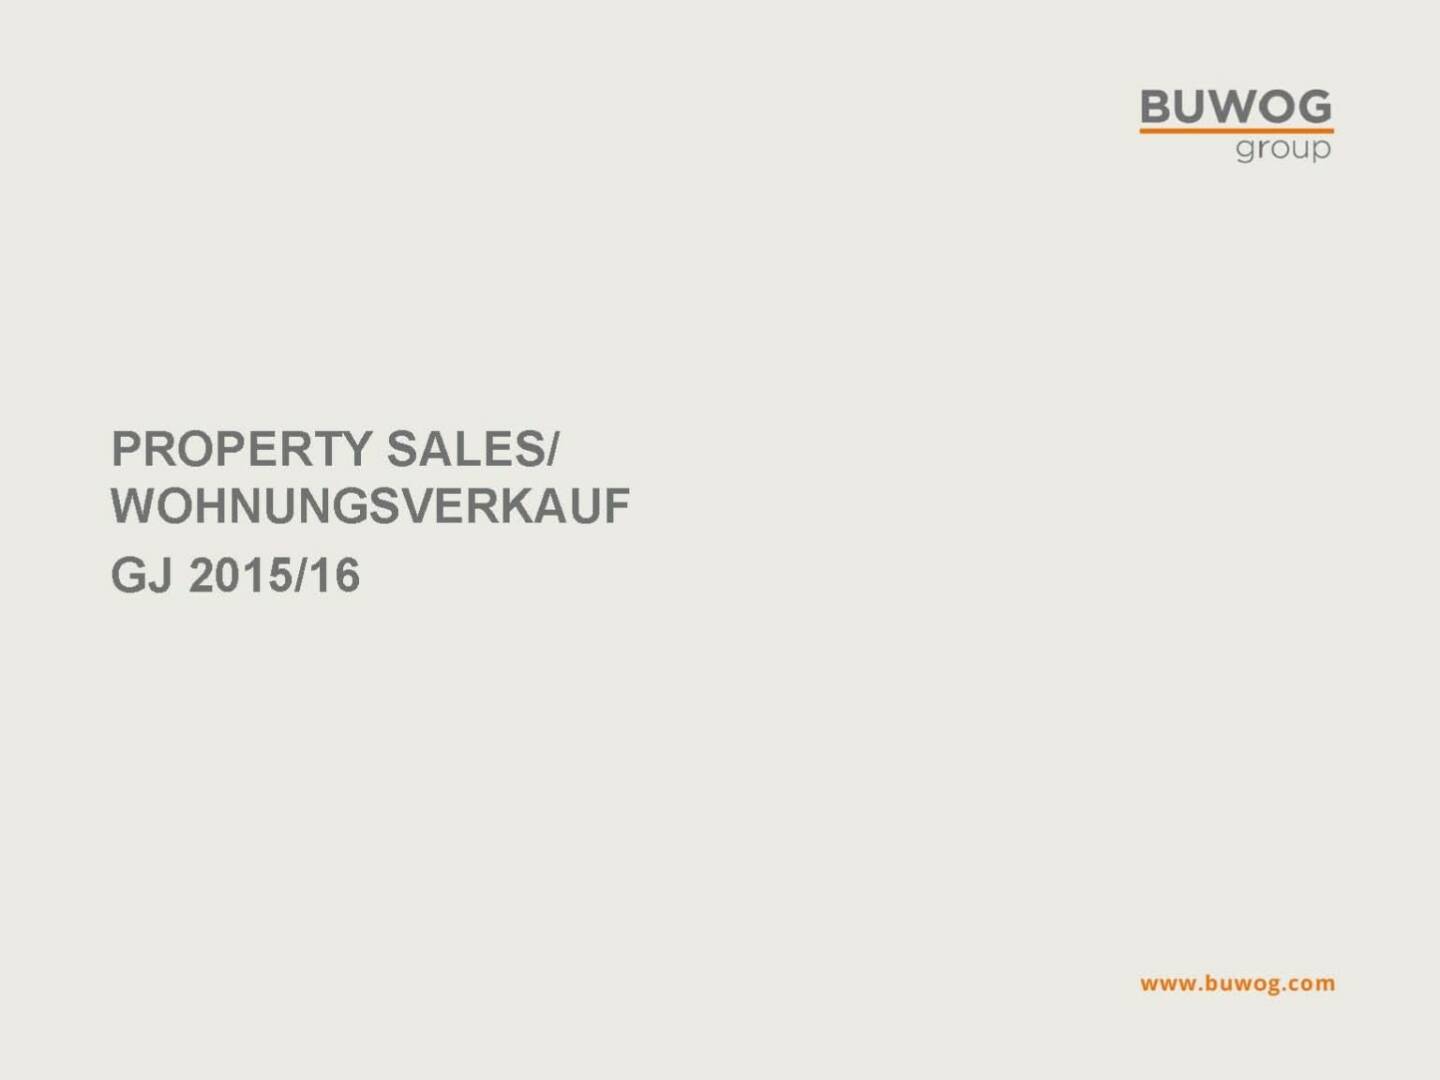 Buwog Group - Property Sales